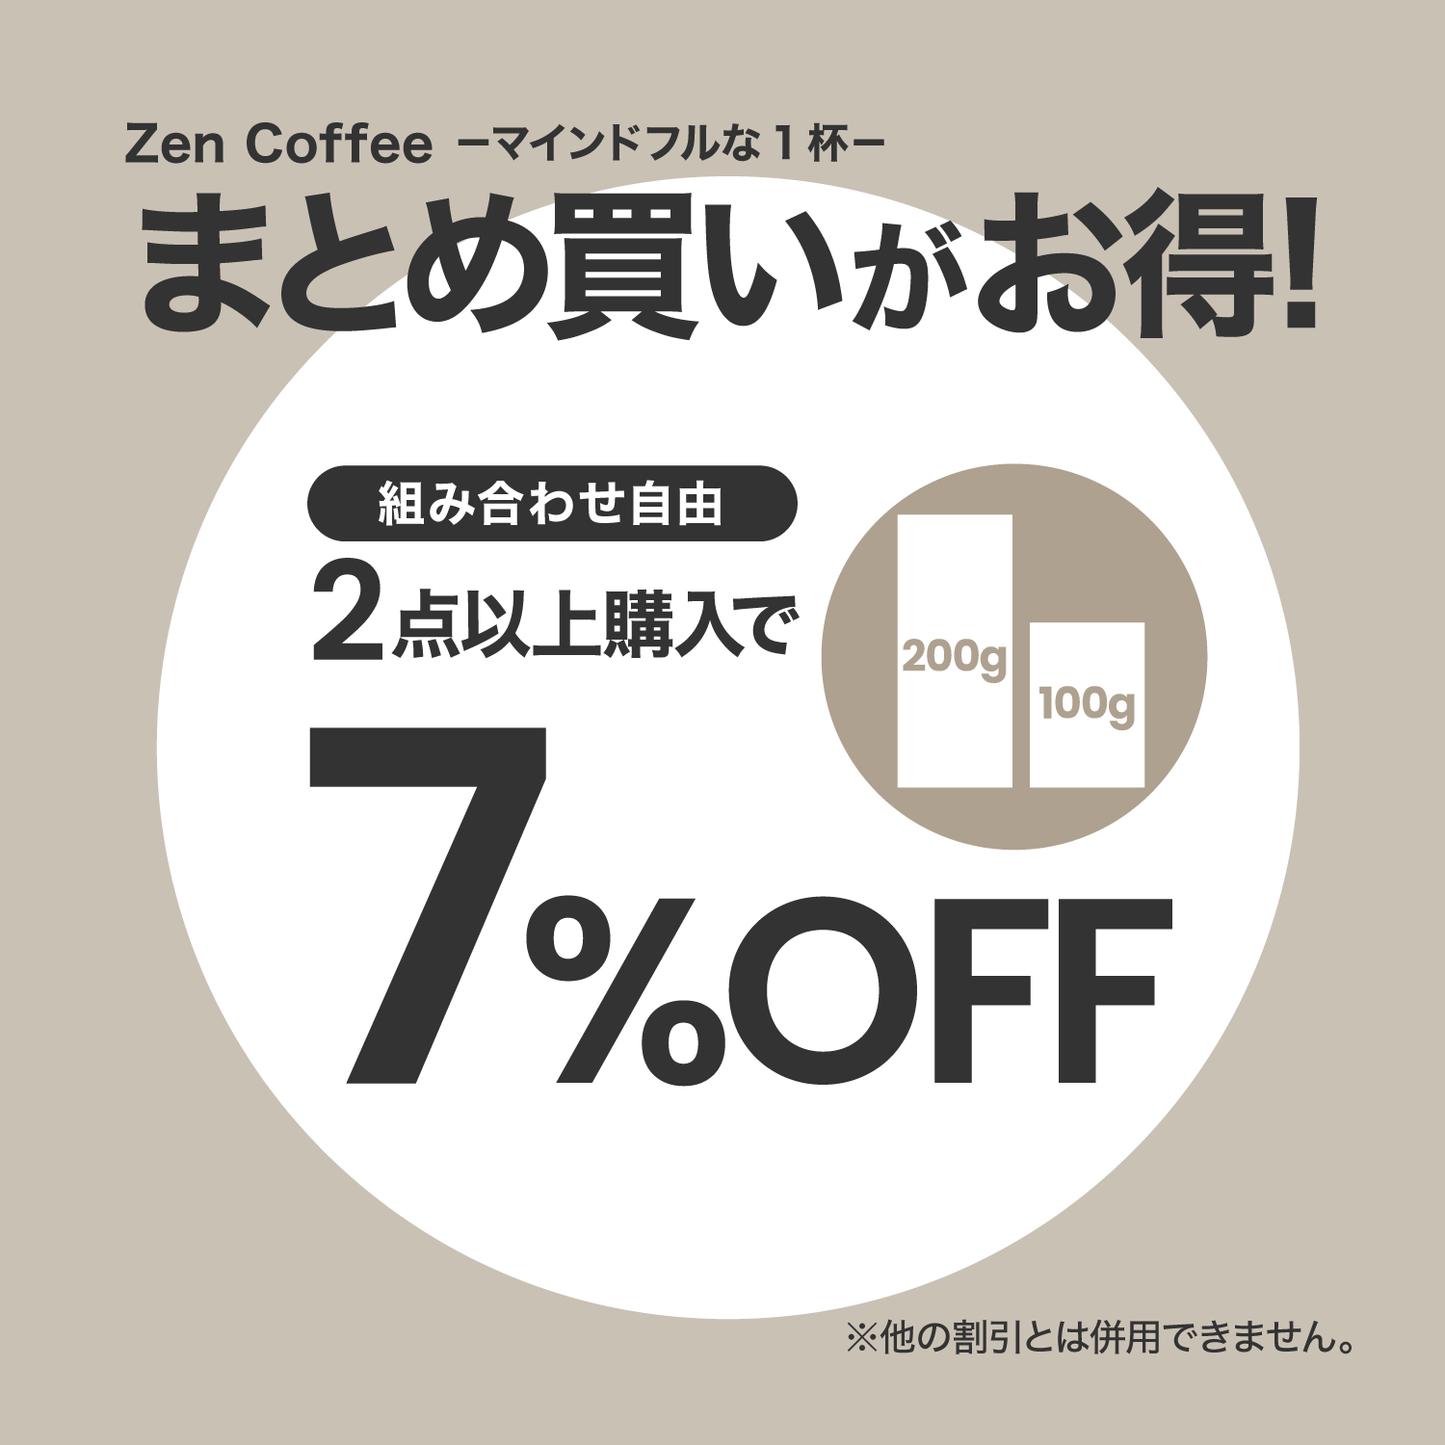 Zen Coffee －マインドフルな1杯－